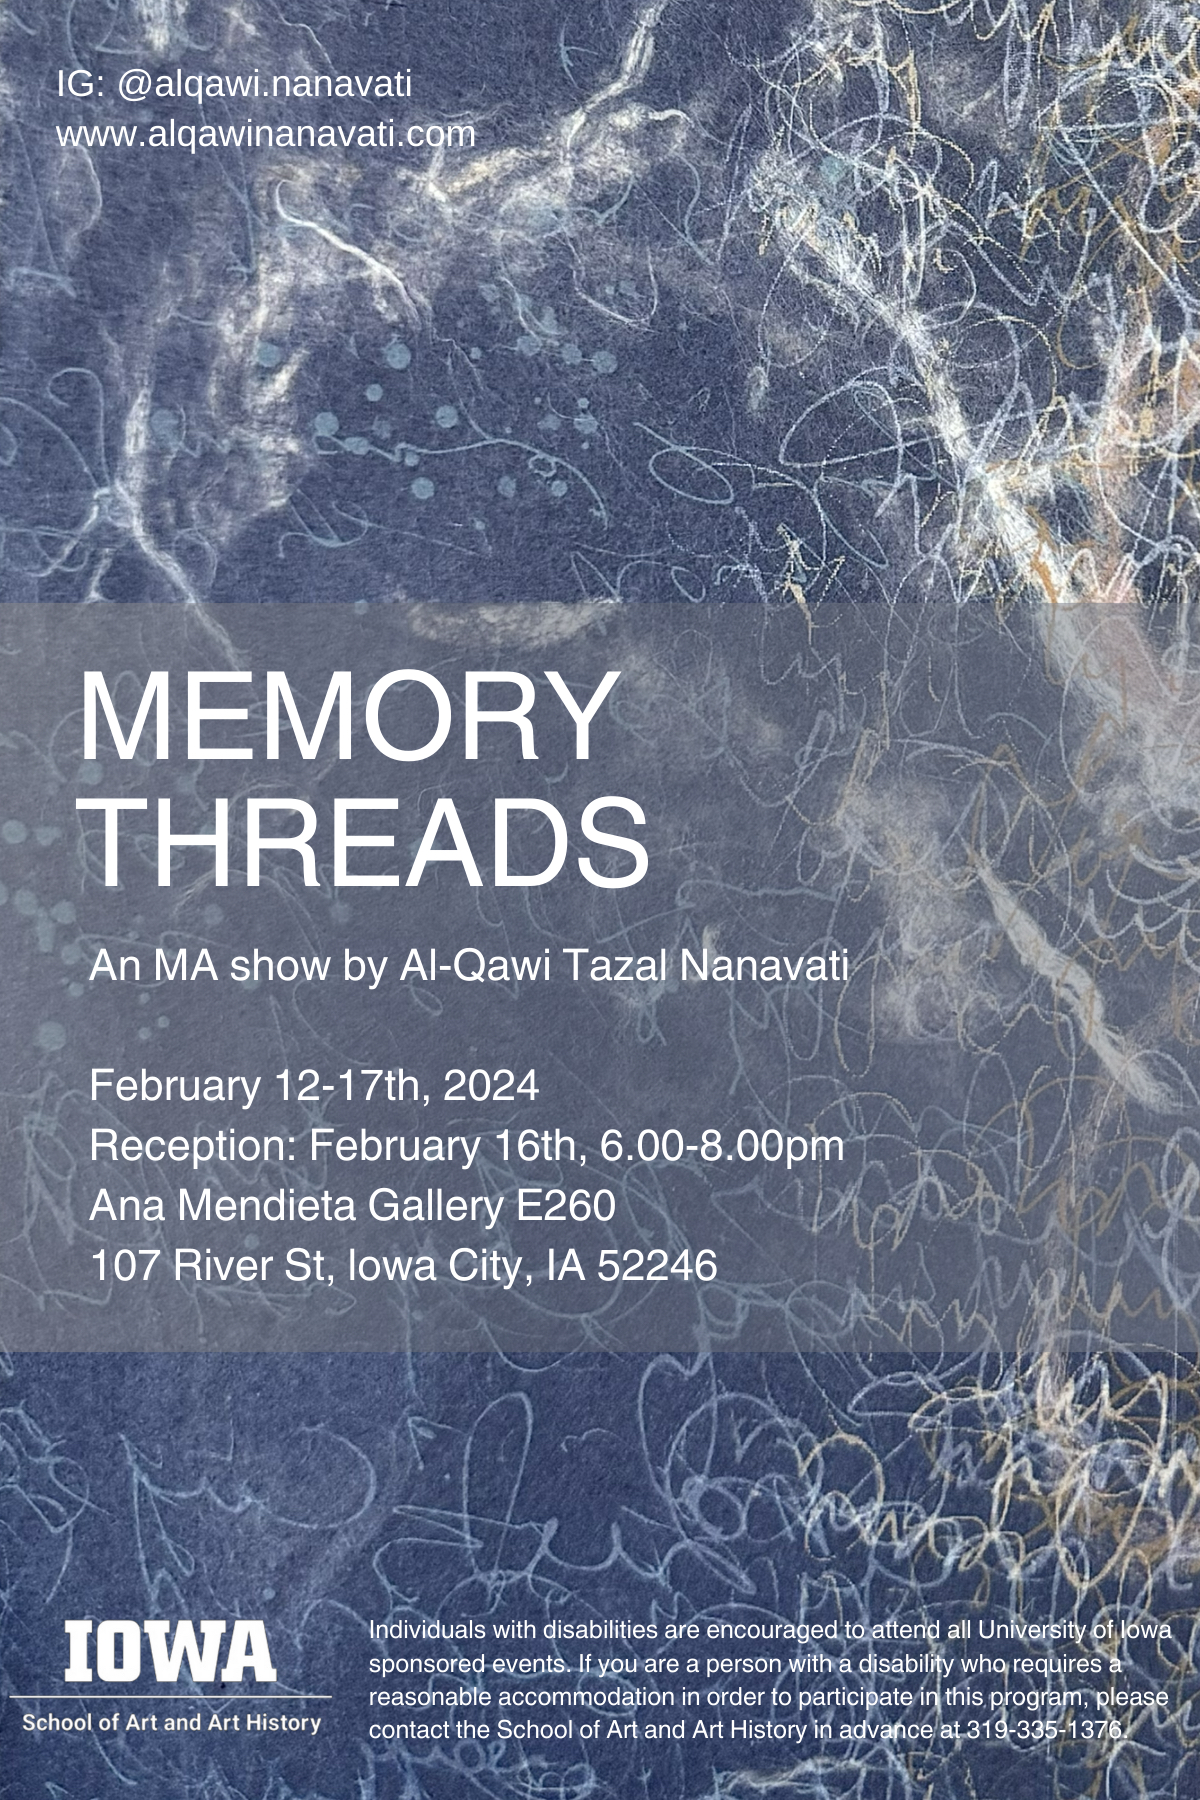 Memory Threads an MA Show by Al-Qawi Tazal Nanavati February 12-17, 2024 Reception February 16, 6:00-8:00pm E260 Ana Mendieta Gallery